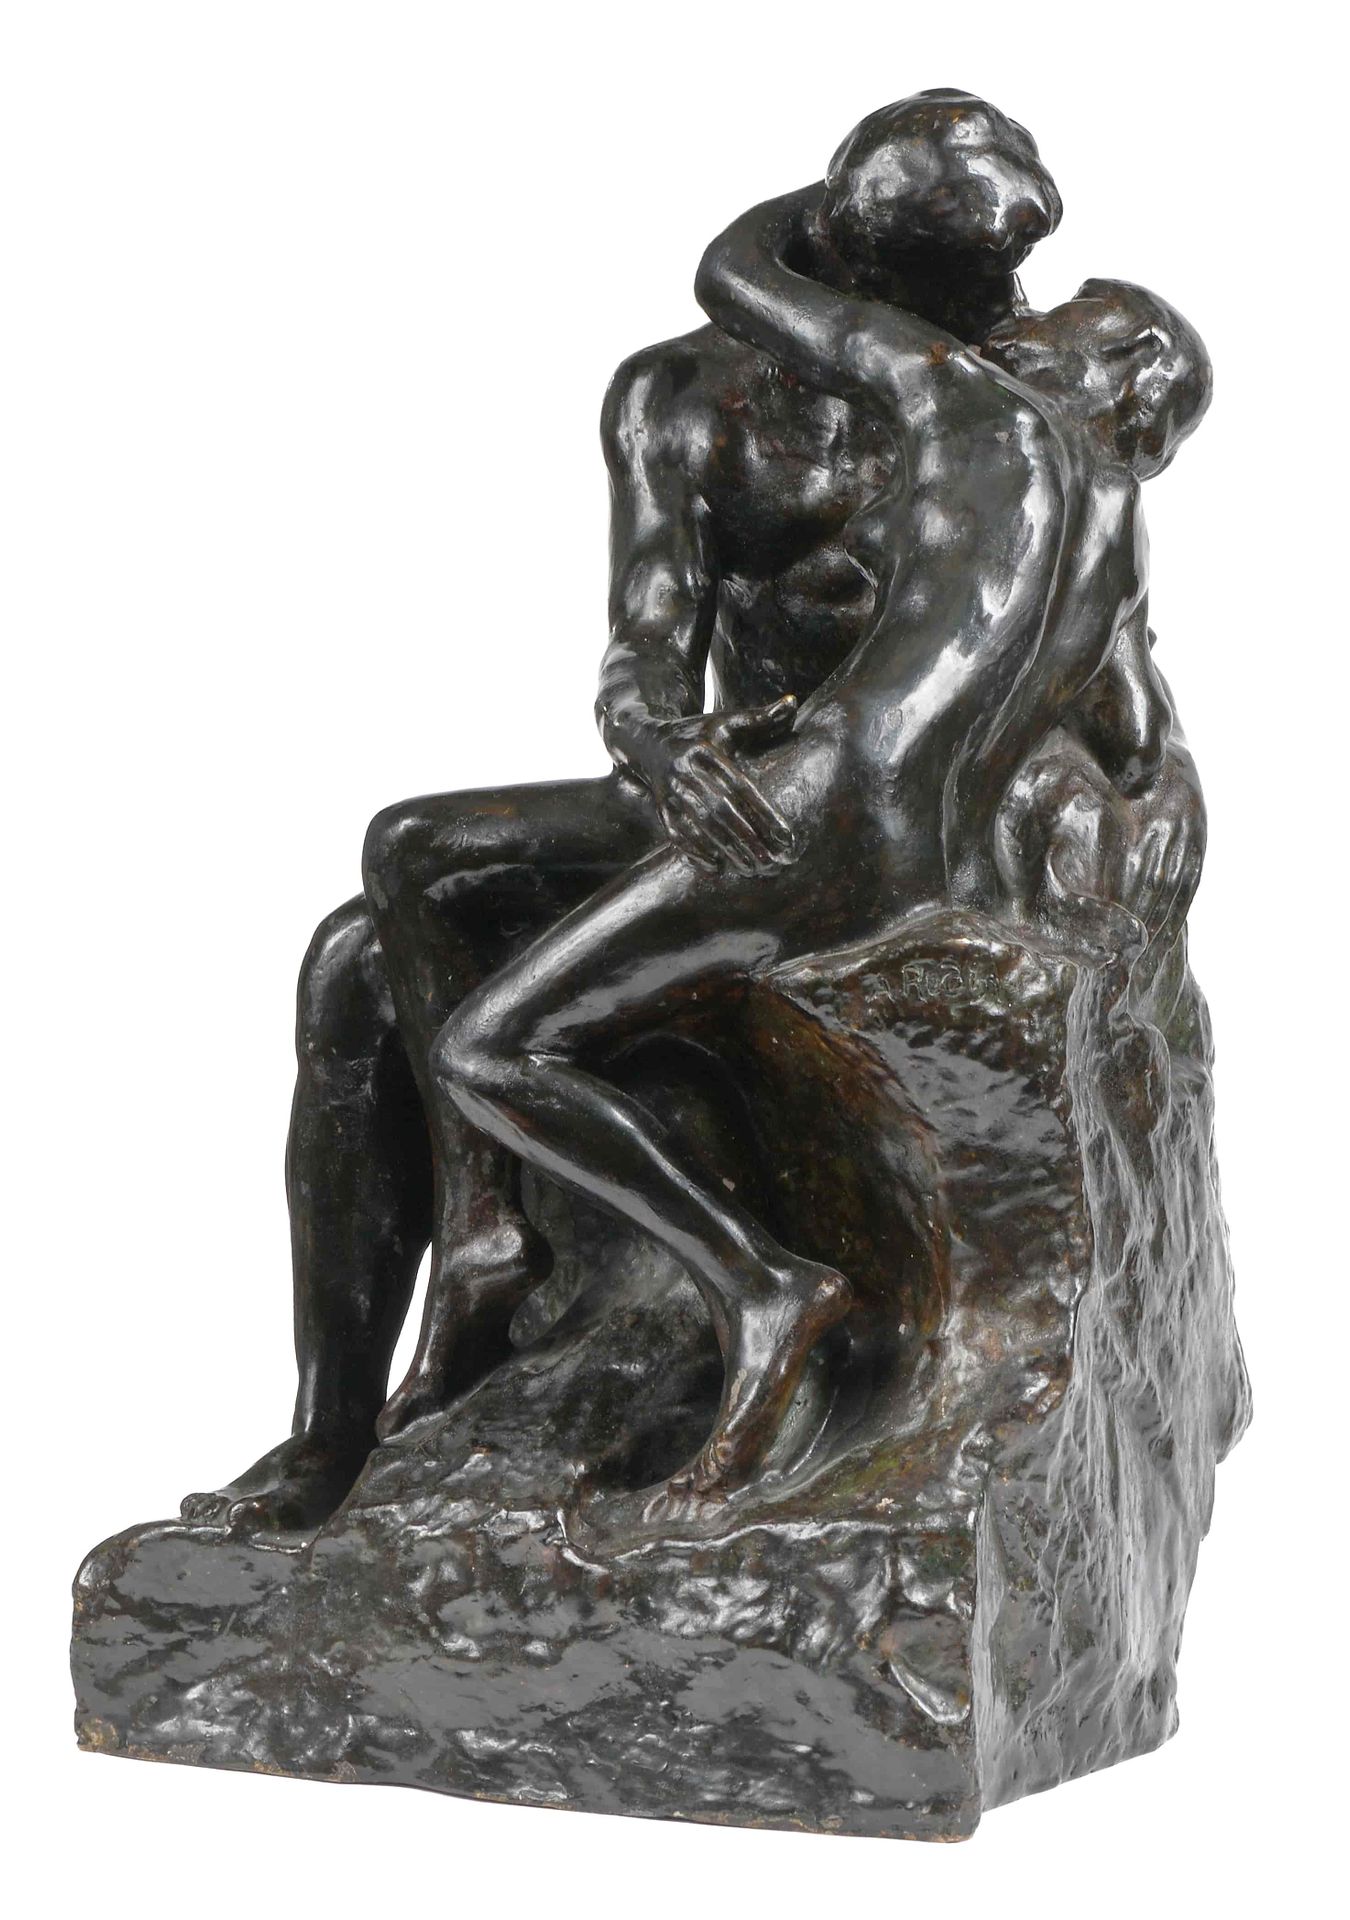 Null 取材于奥古斯特-罗丹（1840-1917 年）的《吻》 青铜打样，带绿色铜锈。女人臀部下的岩石上有签名 "A.RODIN"。男子臀部下方刻有 "F B&hellip;